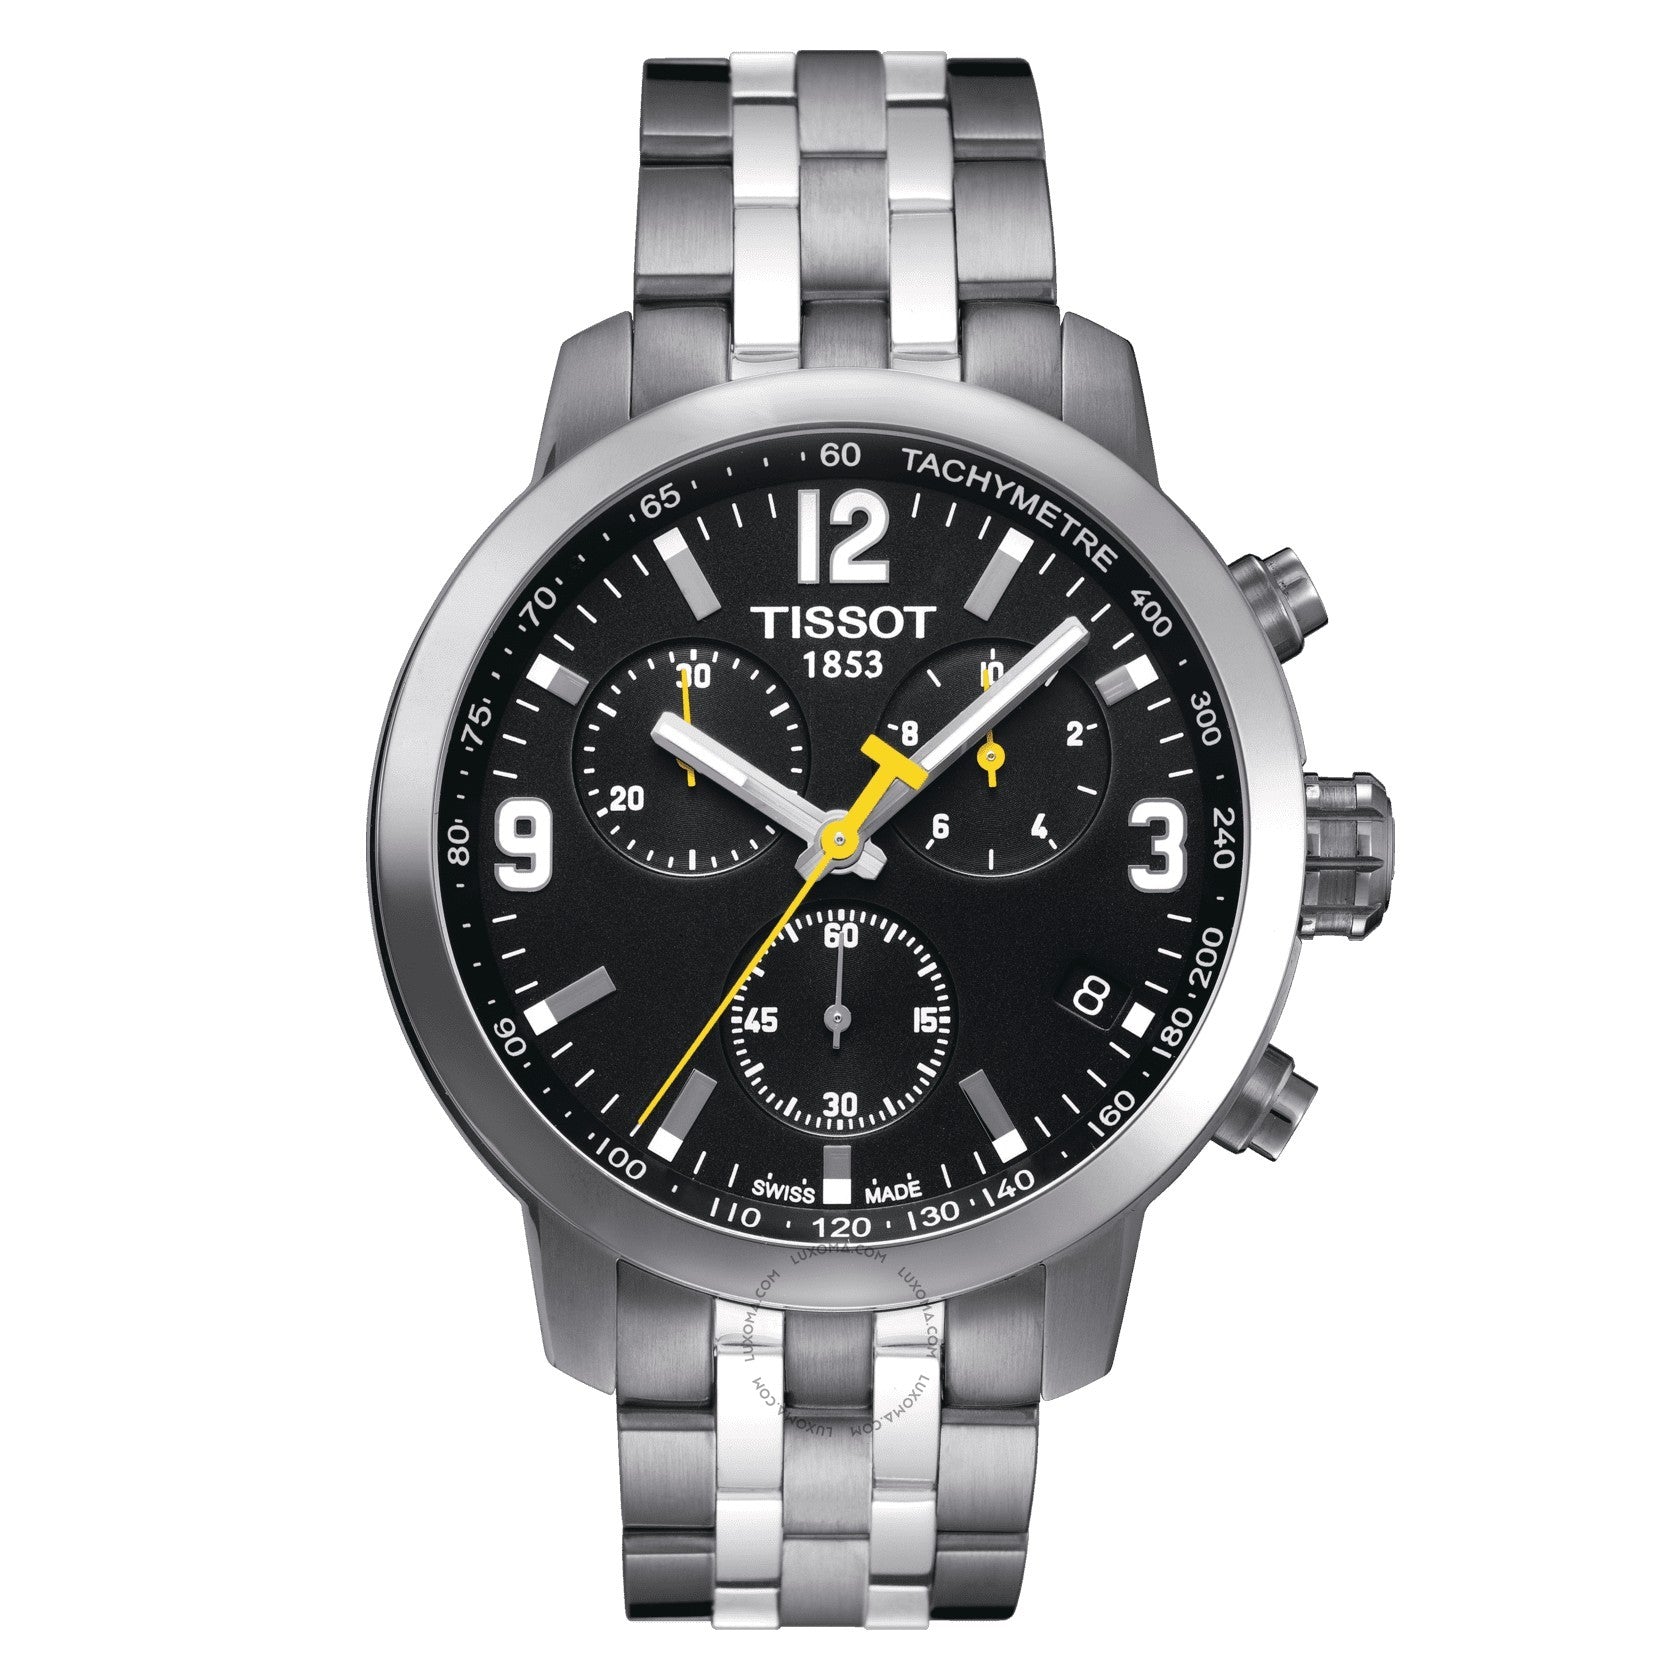 Tissot PRC 200 Chronograph Black Dial Men's Watch T055.417.11.057.00